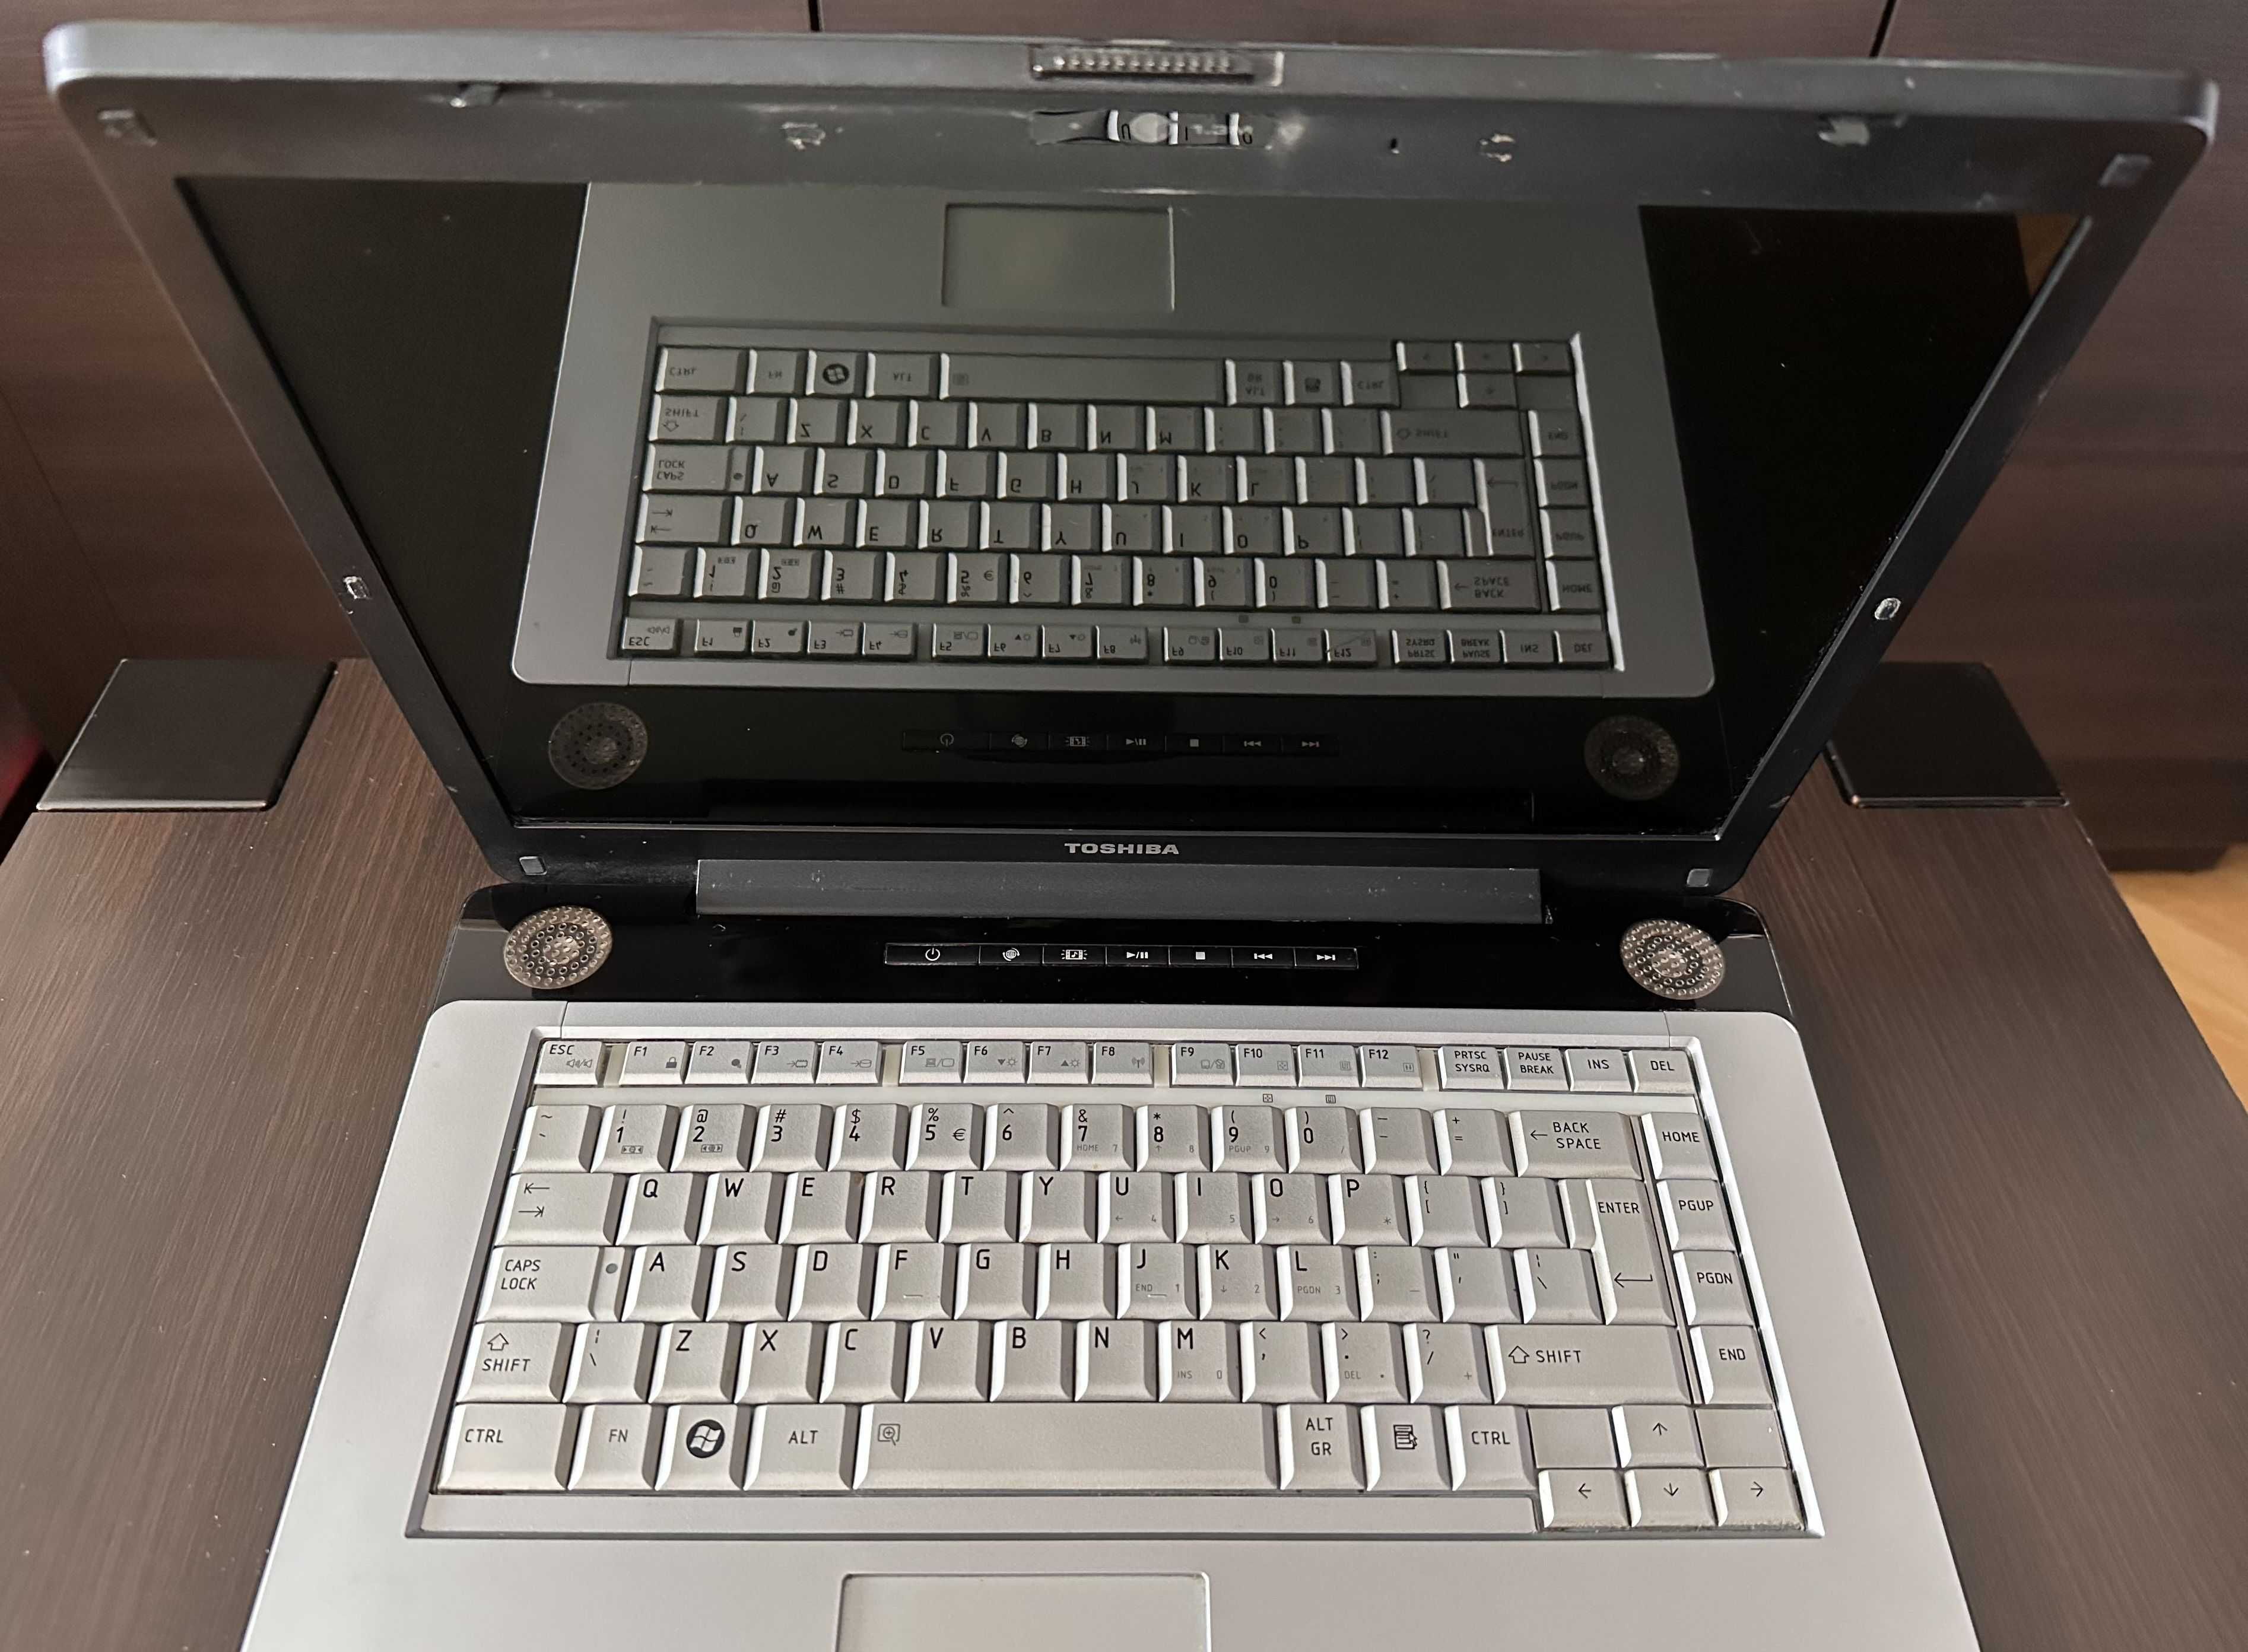 Toshiba A200 - 13O - Laptop